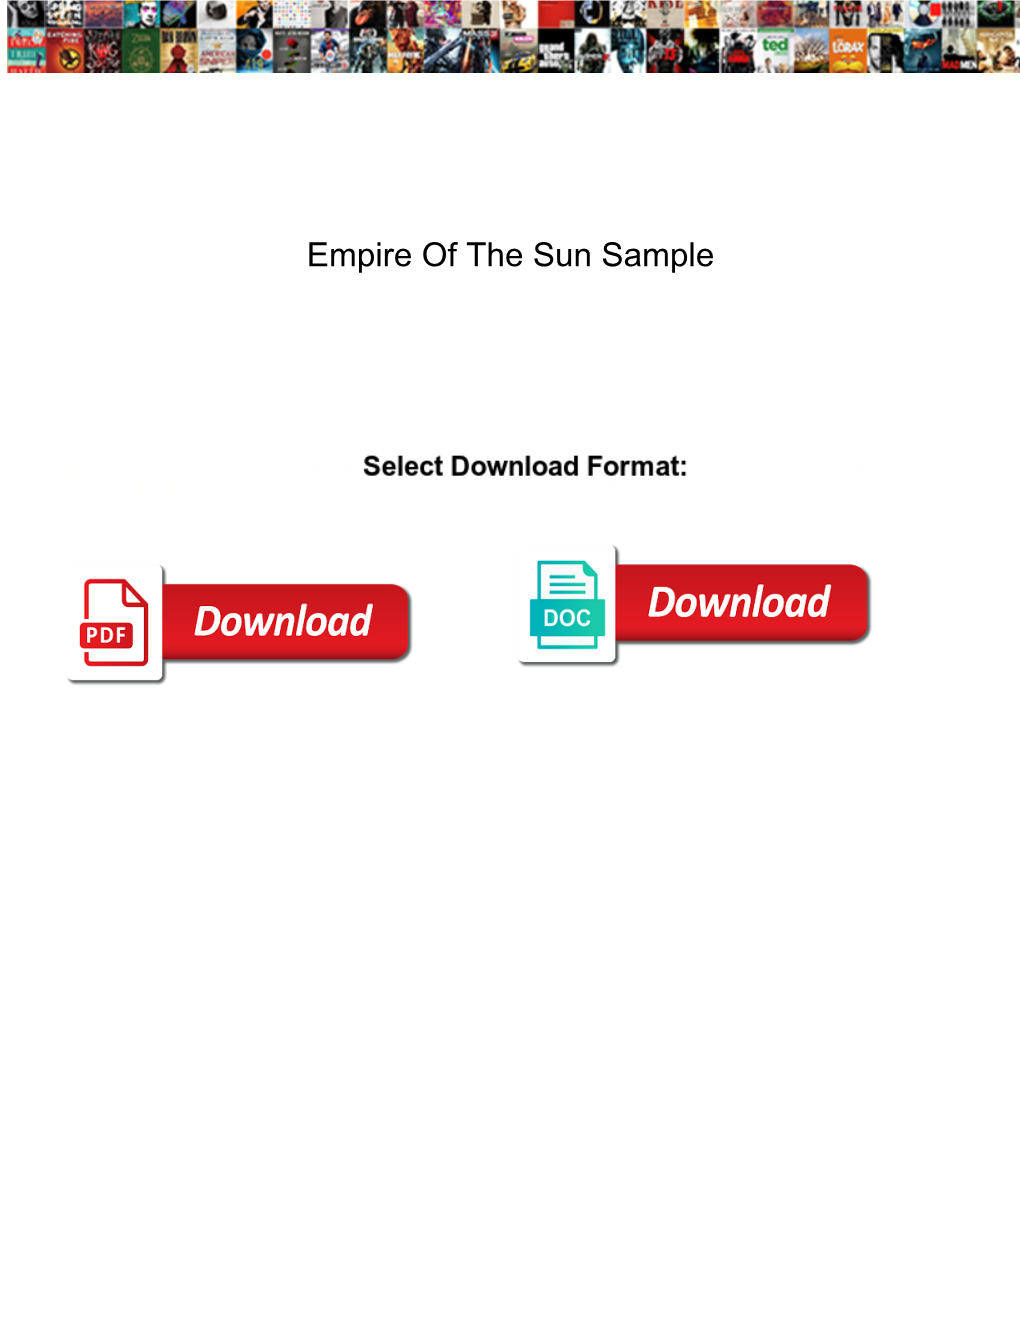 Empire of the Sun Sample